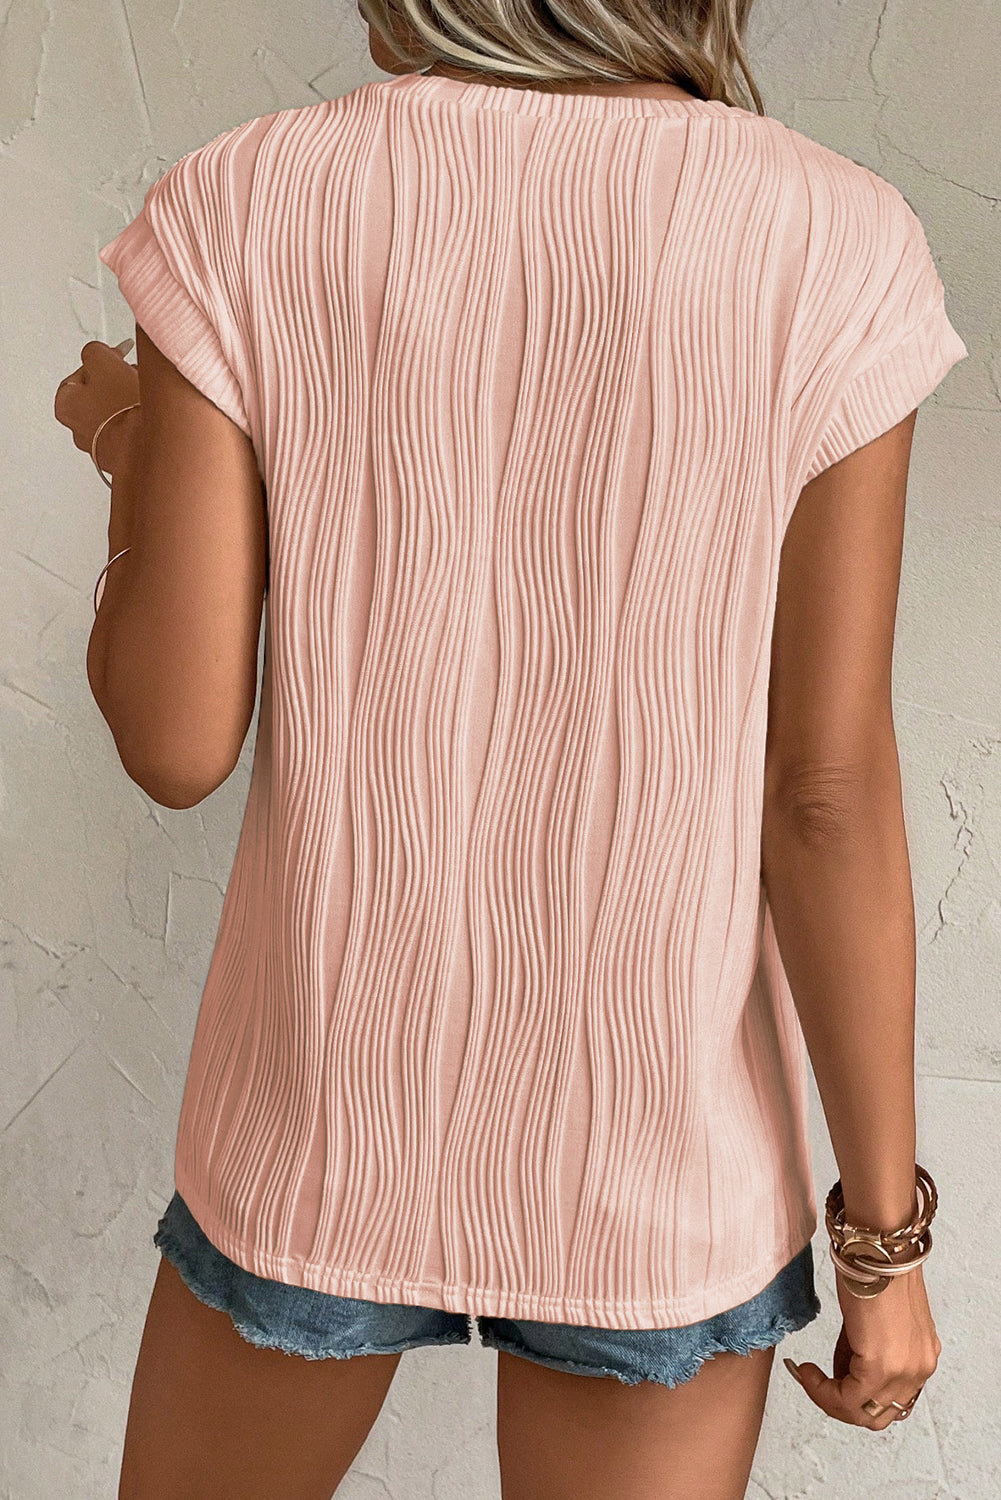 Pink Solid Color Wavy Textured Cap Sleeve Top